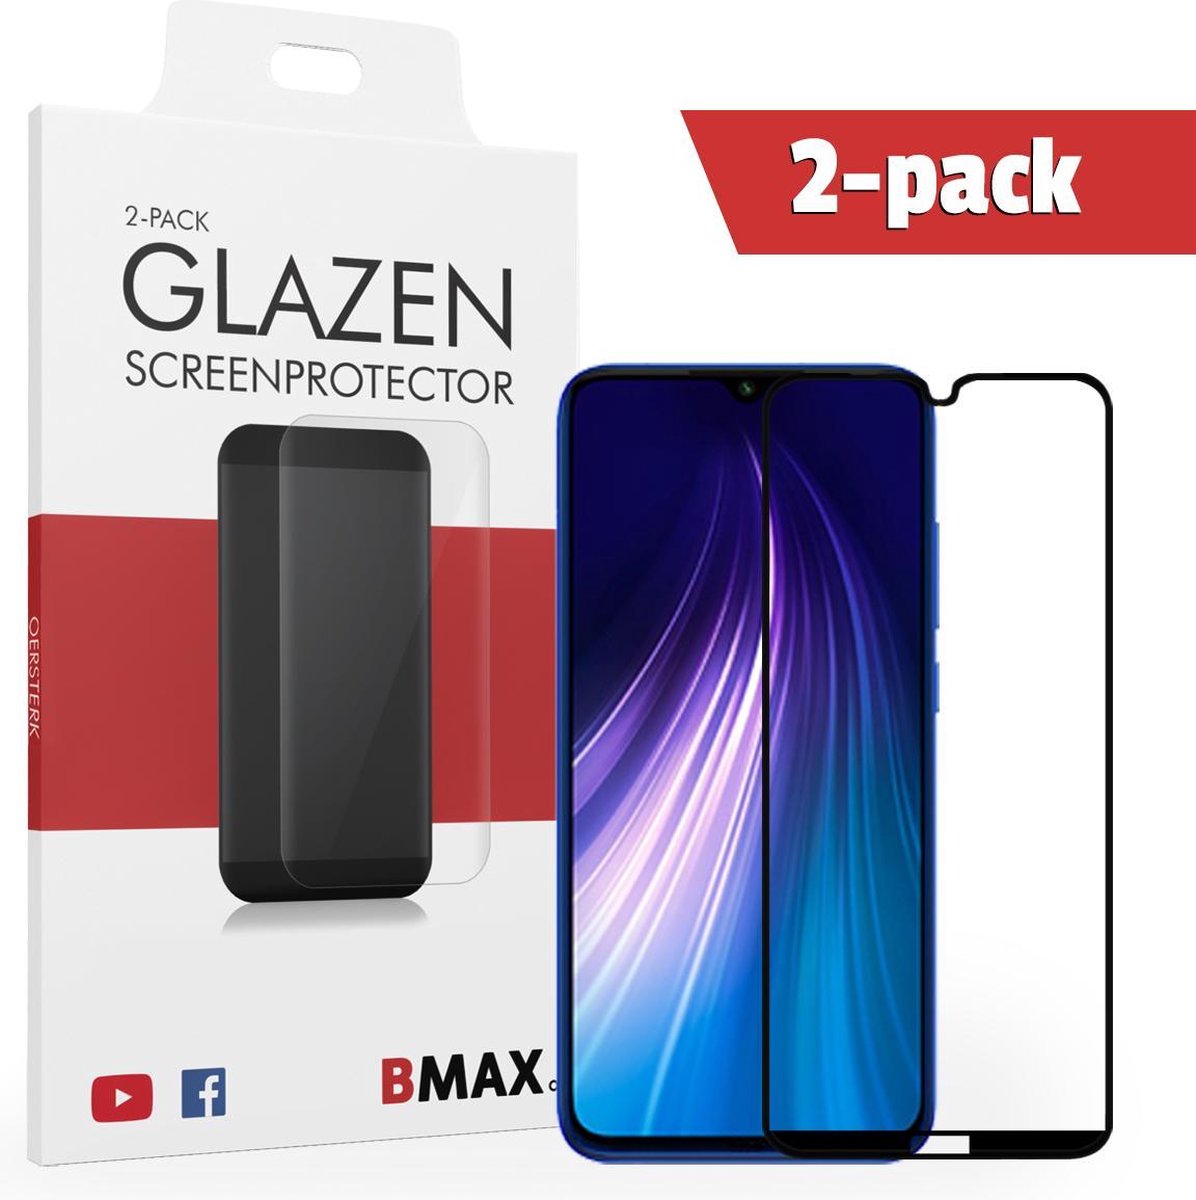 2-pack Bmax Xiaomi Redmi Note 8t Screenprotector - Glass - Full Cover 2.5d - Black